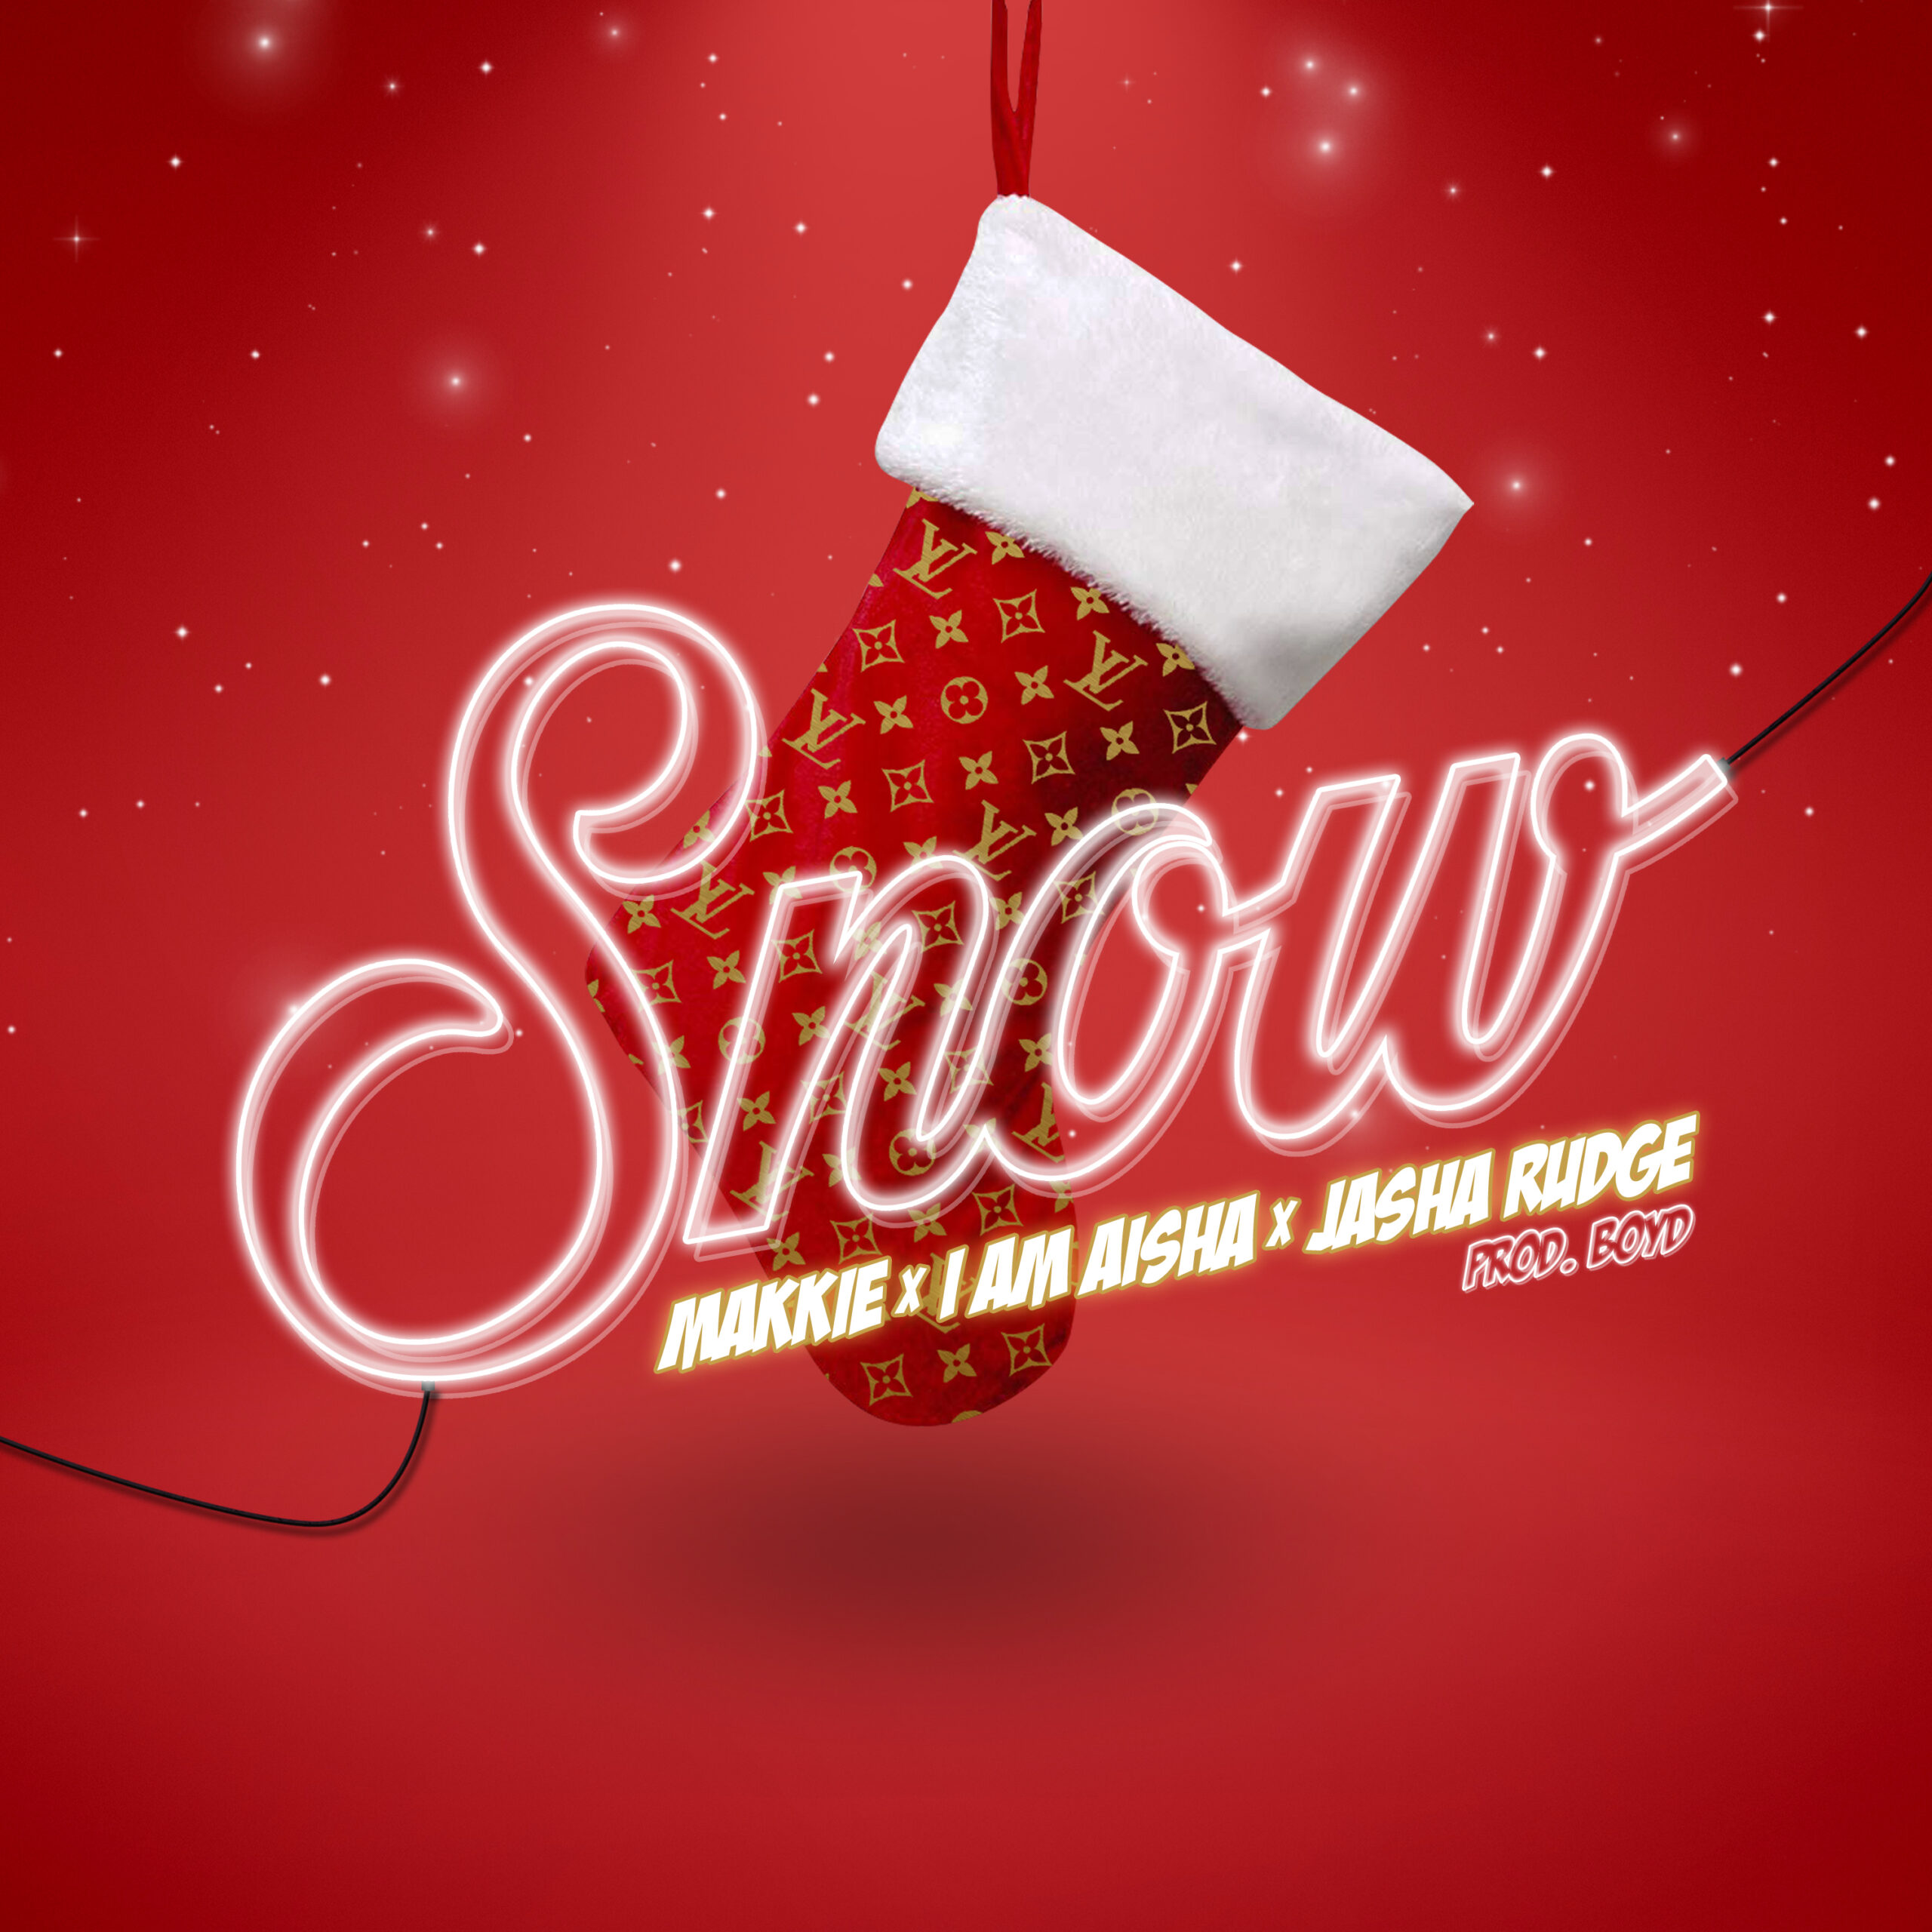 Vrijdag komt de nieuwe single ‘Makkie x I Am Aisha x Jasha Rudge – Snow’ uit ‼️